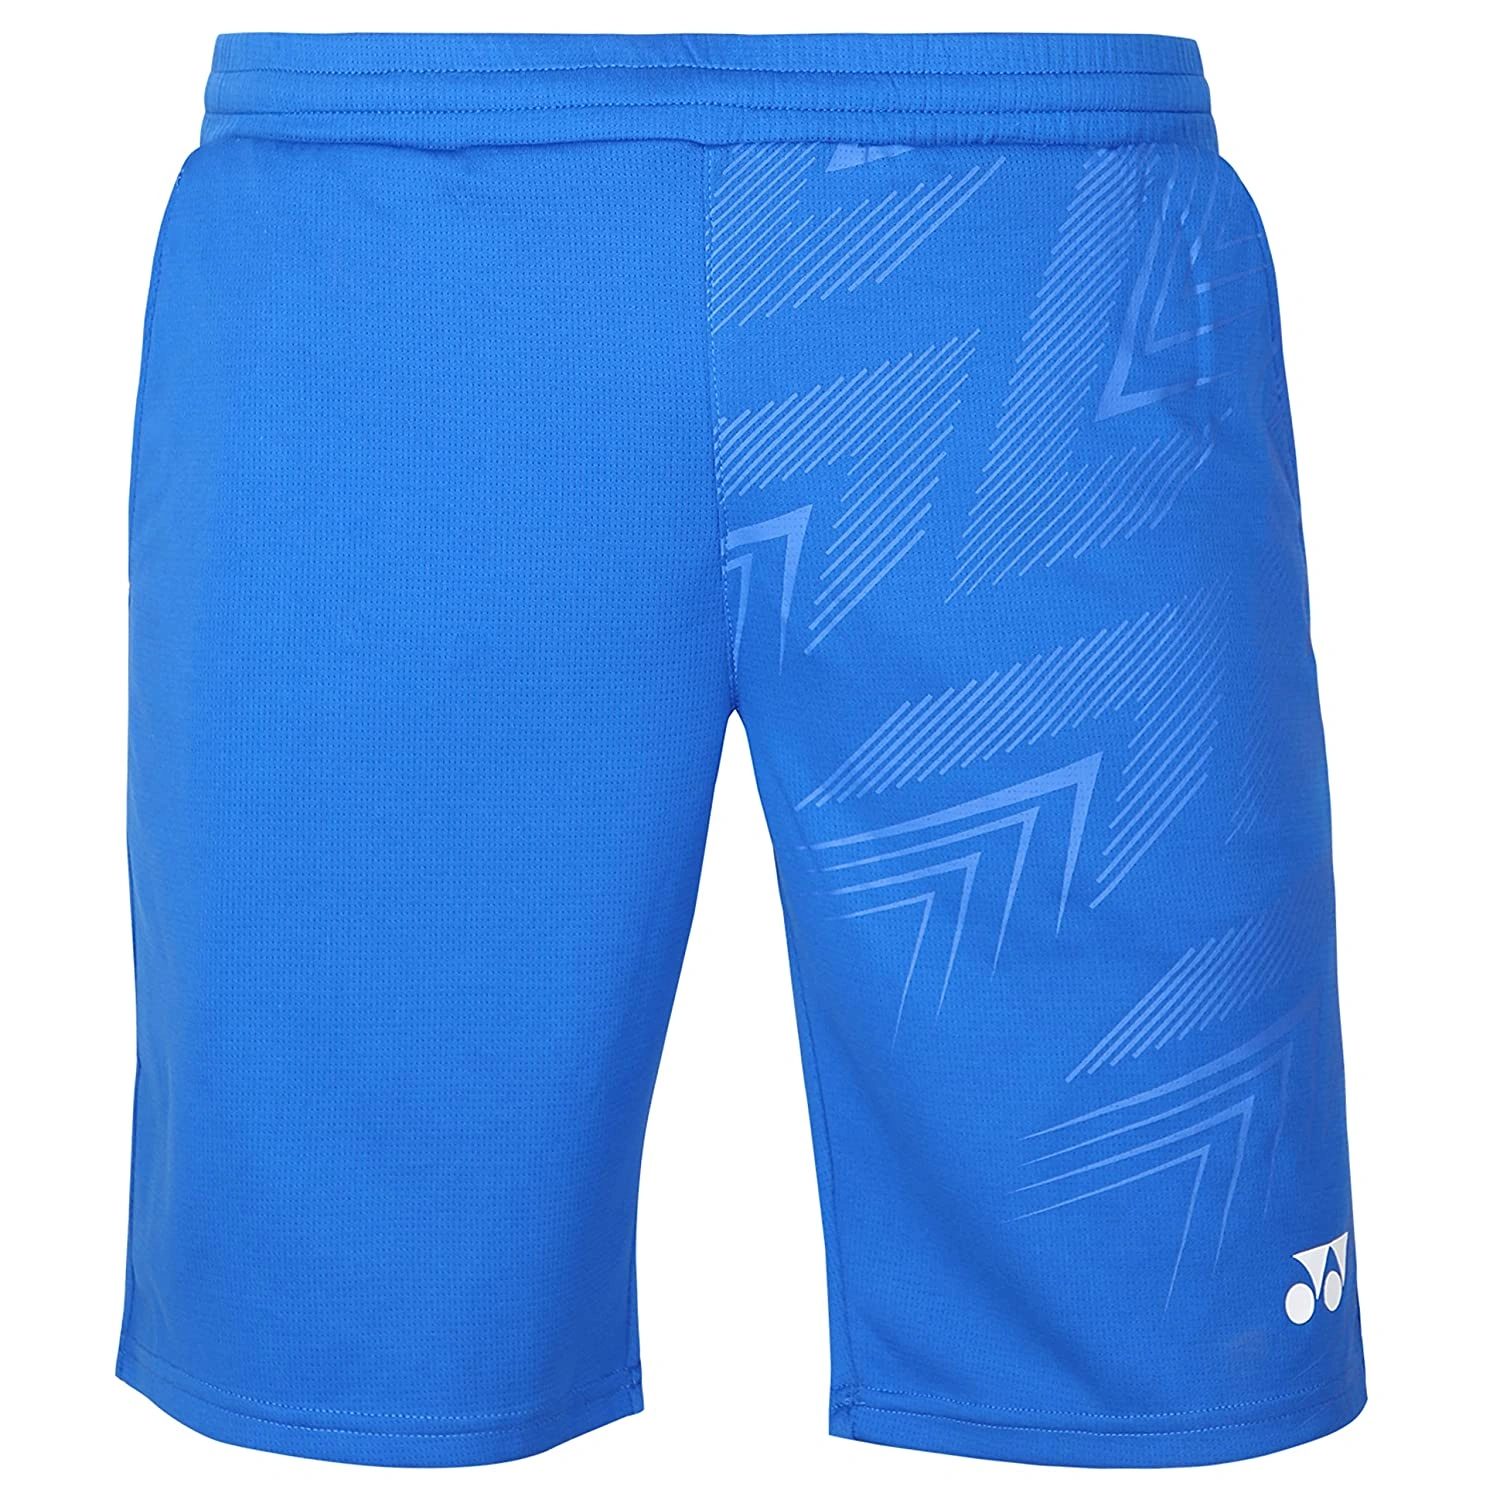 YONEX 2061 Senior Badminton/Tennis Shorts-NAUTICAL BLUE-XL-1